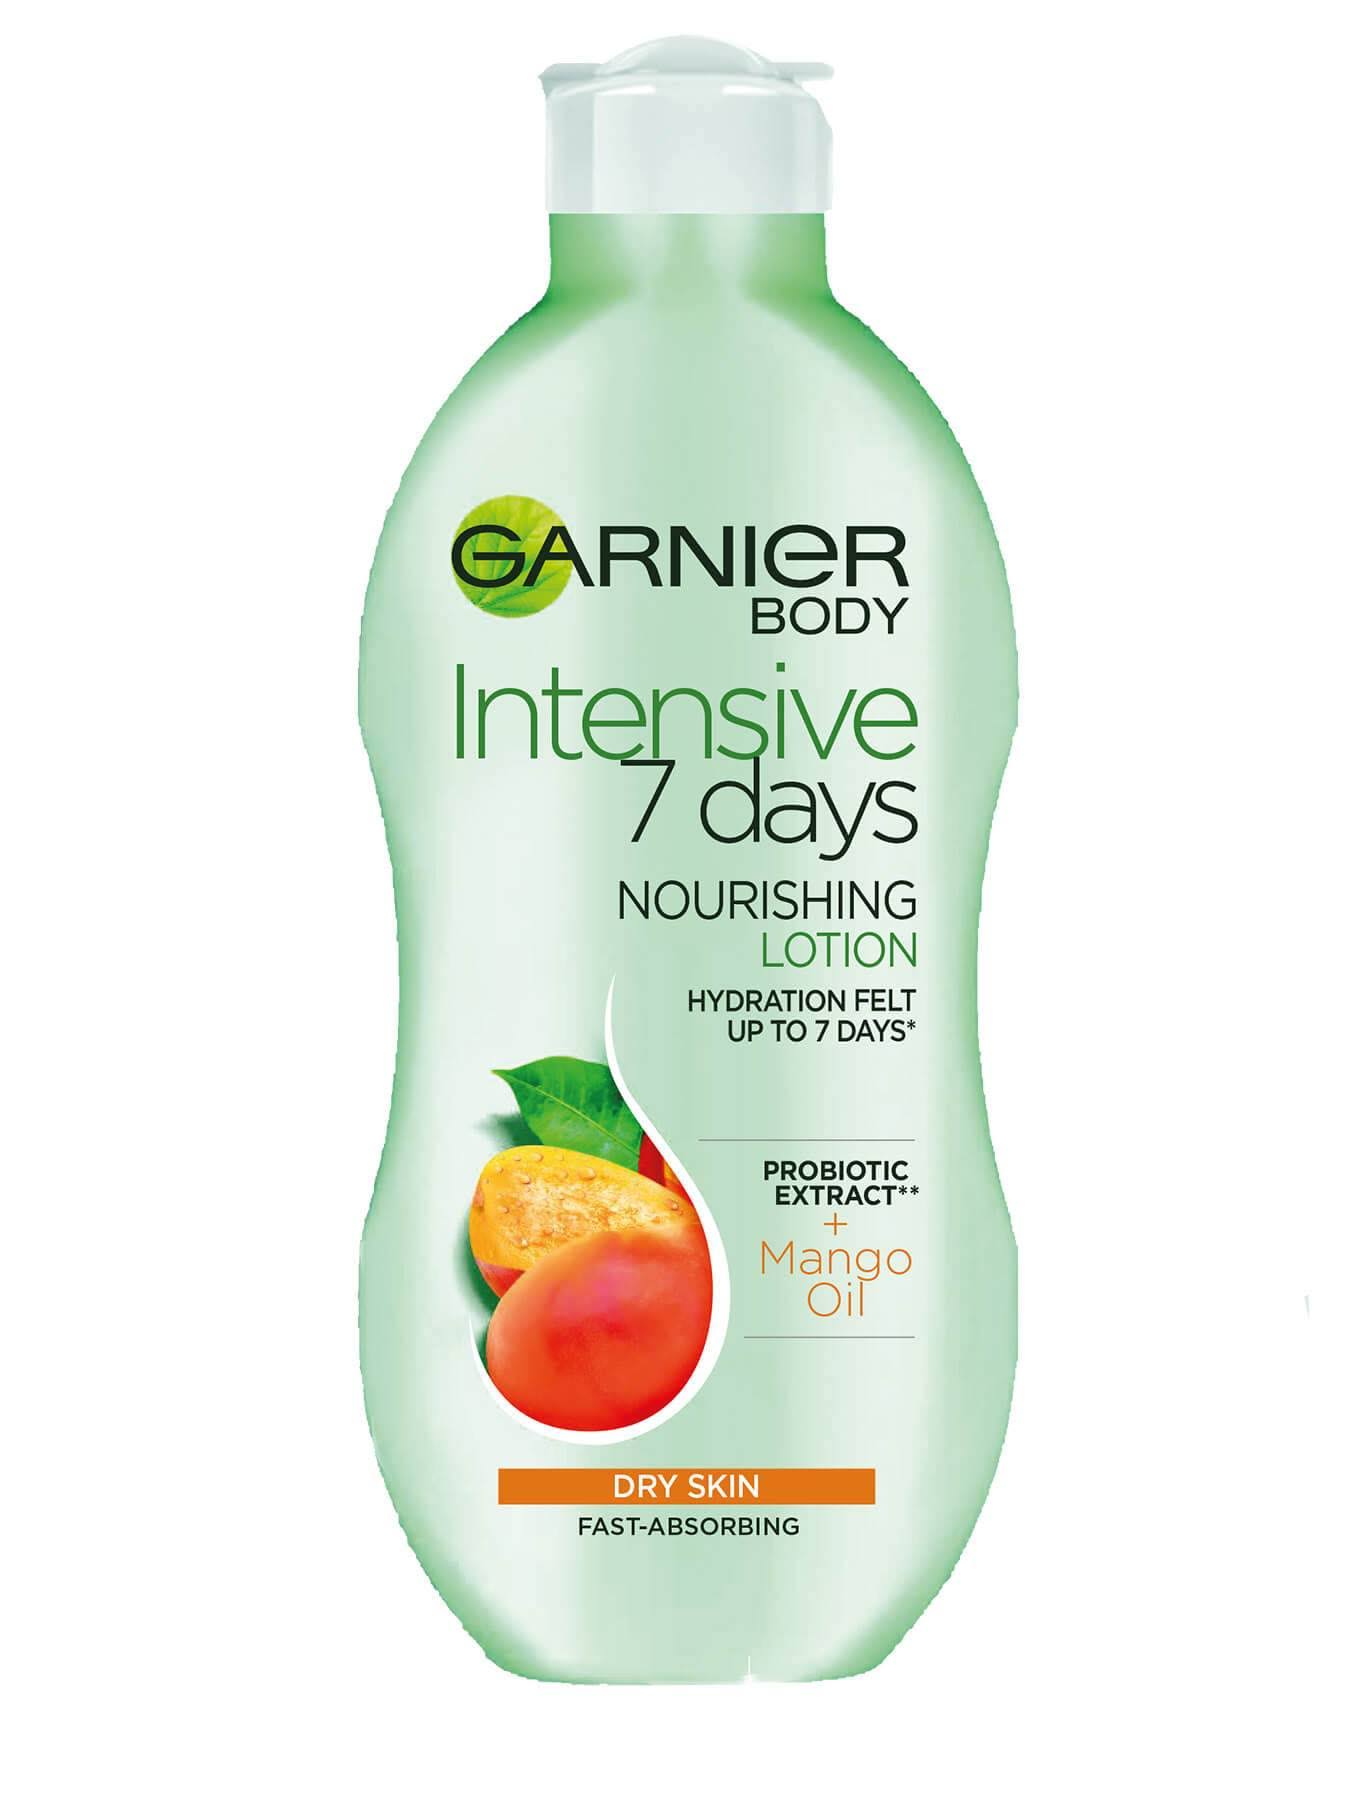 Garnier Intensive Dry Skin 7 Days Mango Probiotic Extract Body Lotion - 250ml